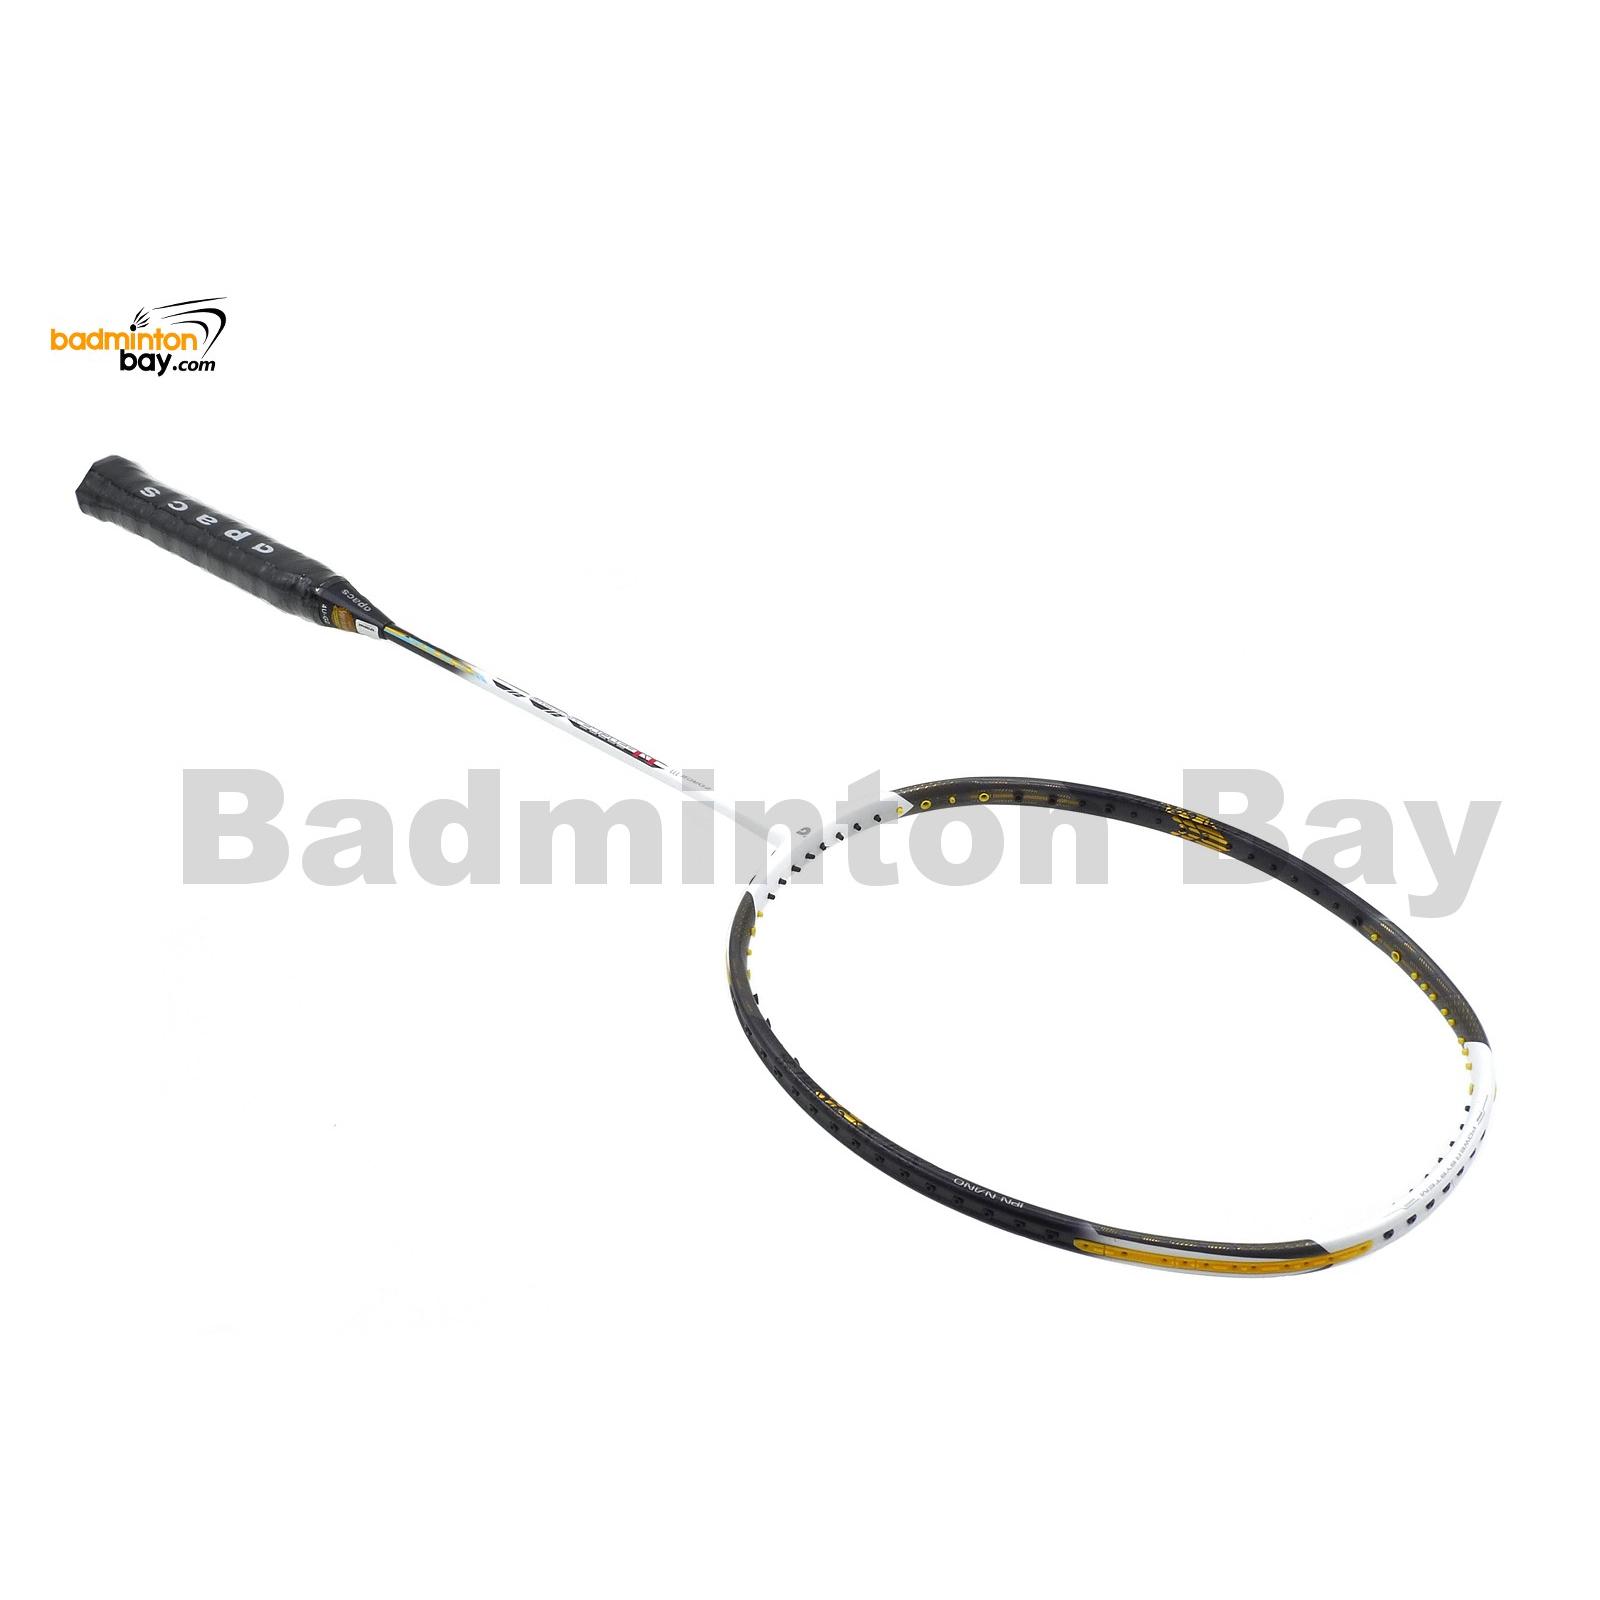 Apacs N Force III White Badminton Racket Compact Frame (4U)